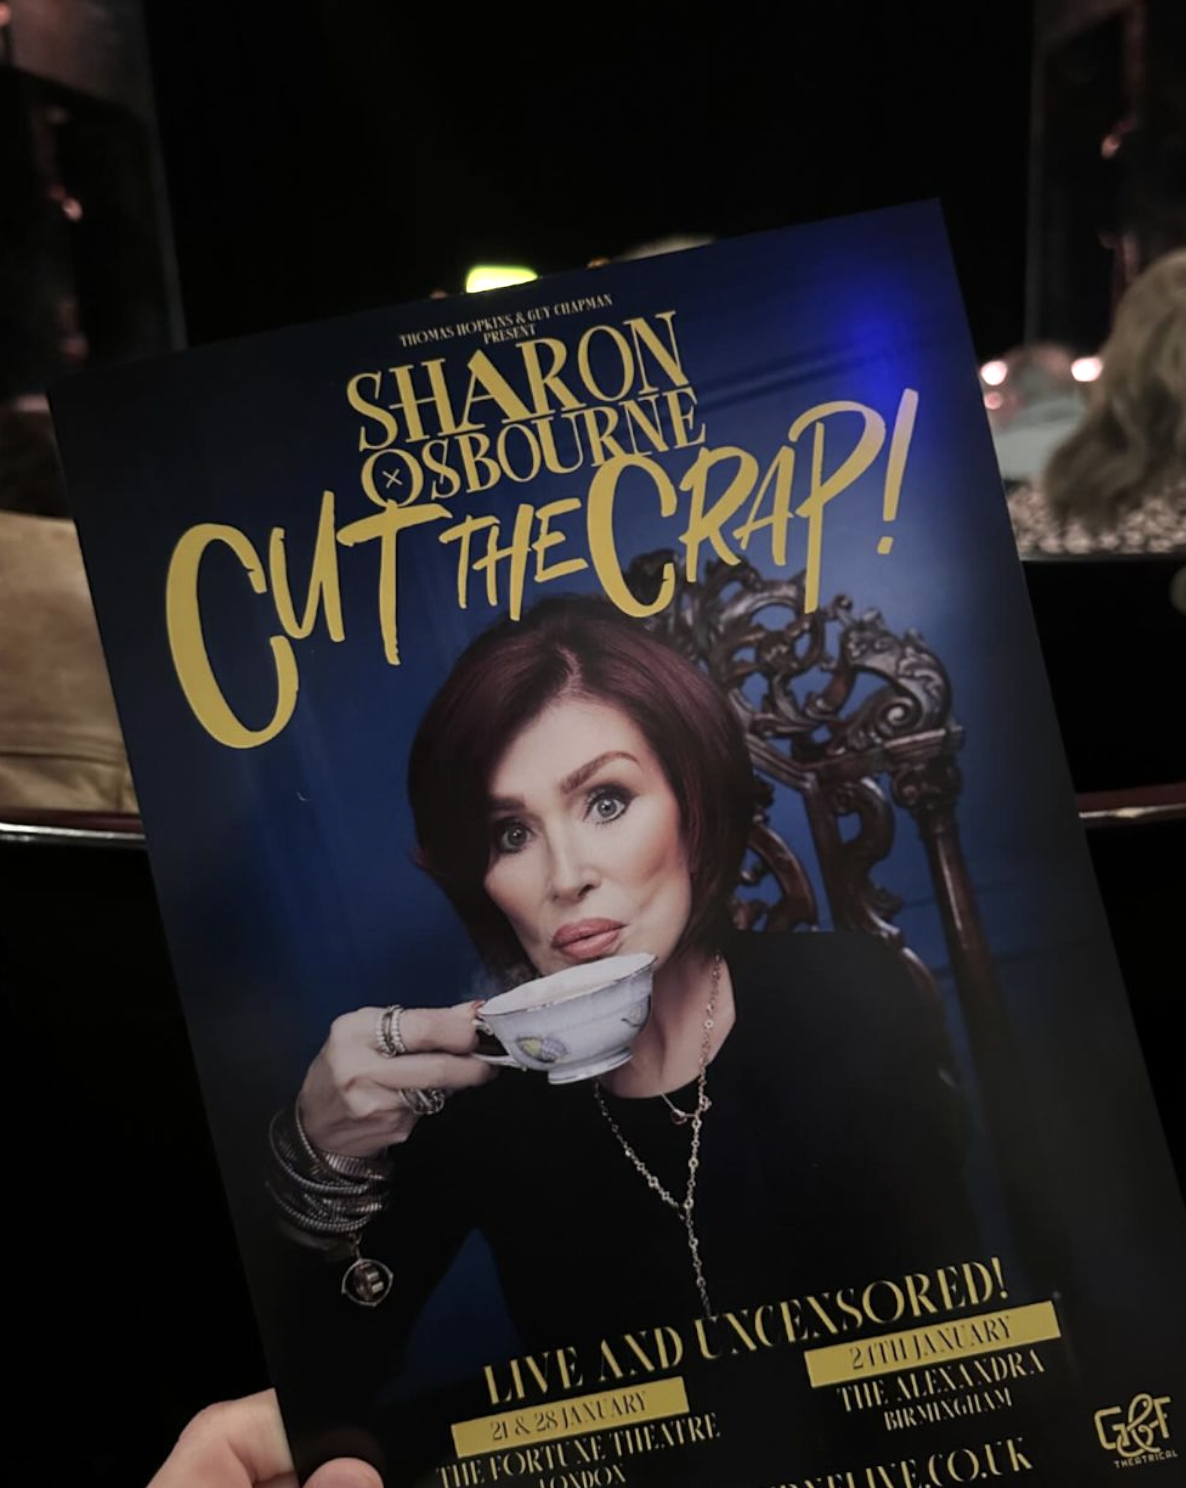 Sharon Osbourne - Cut the Crap